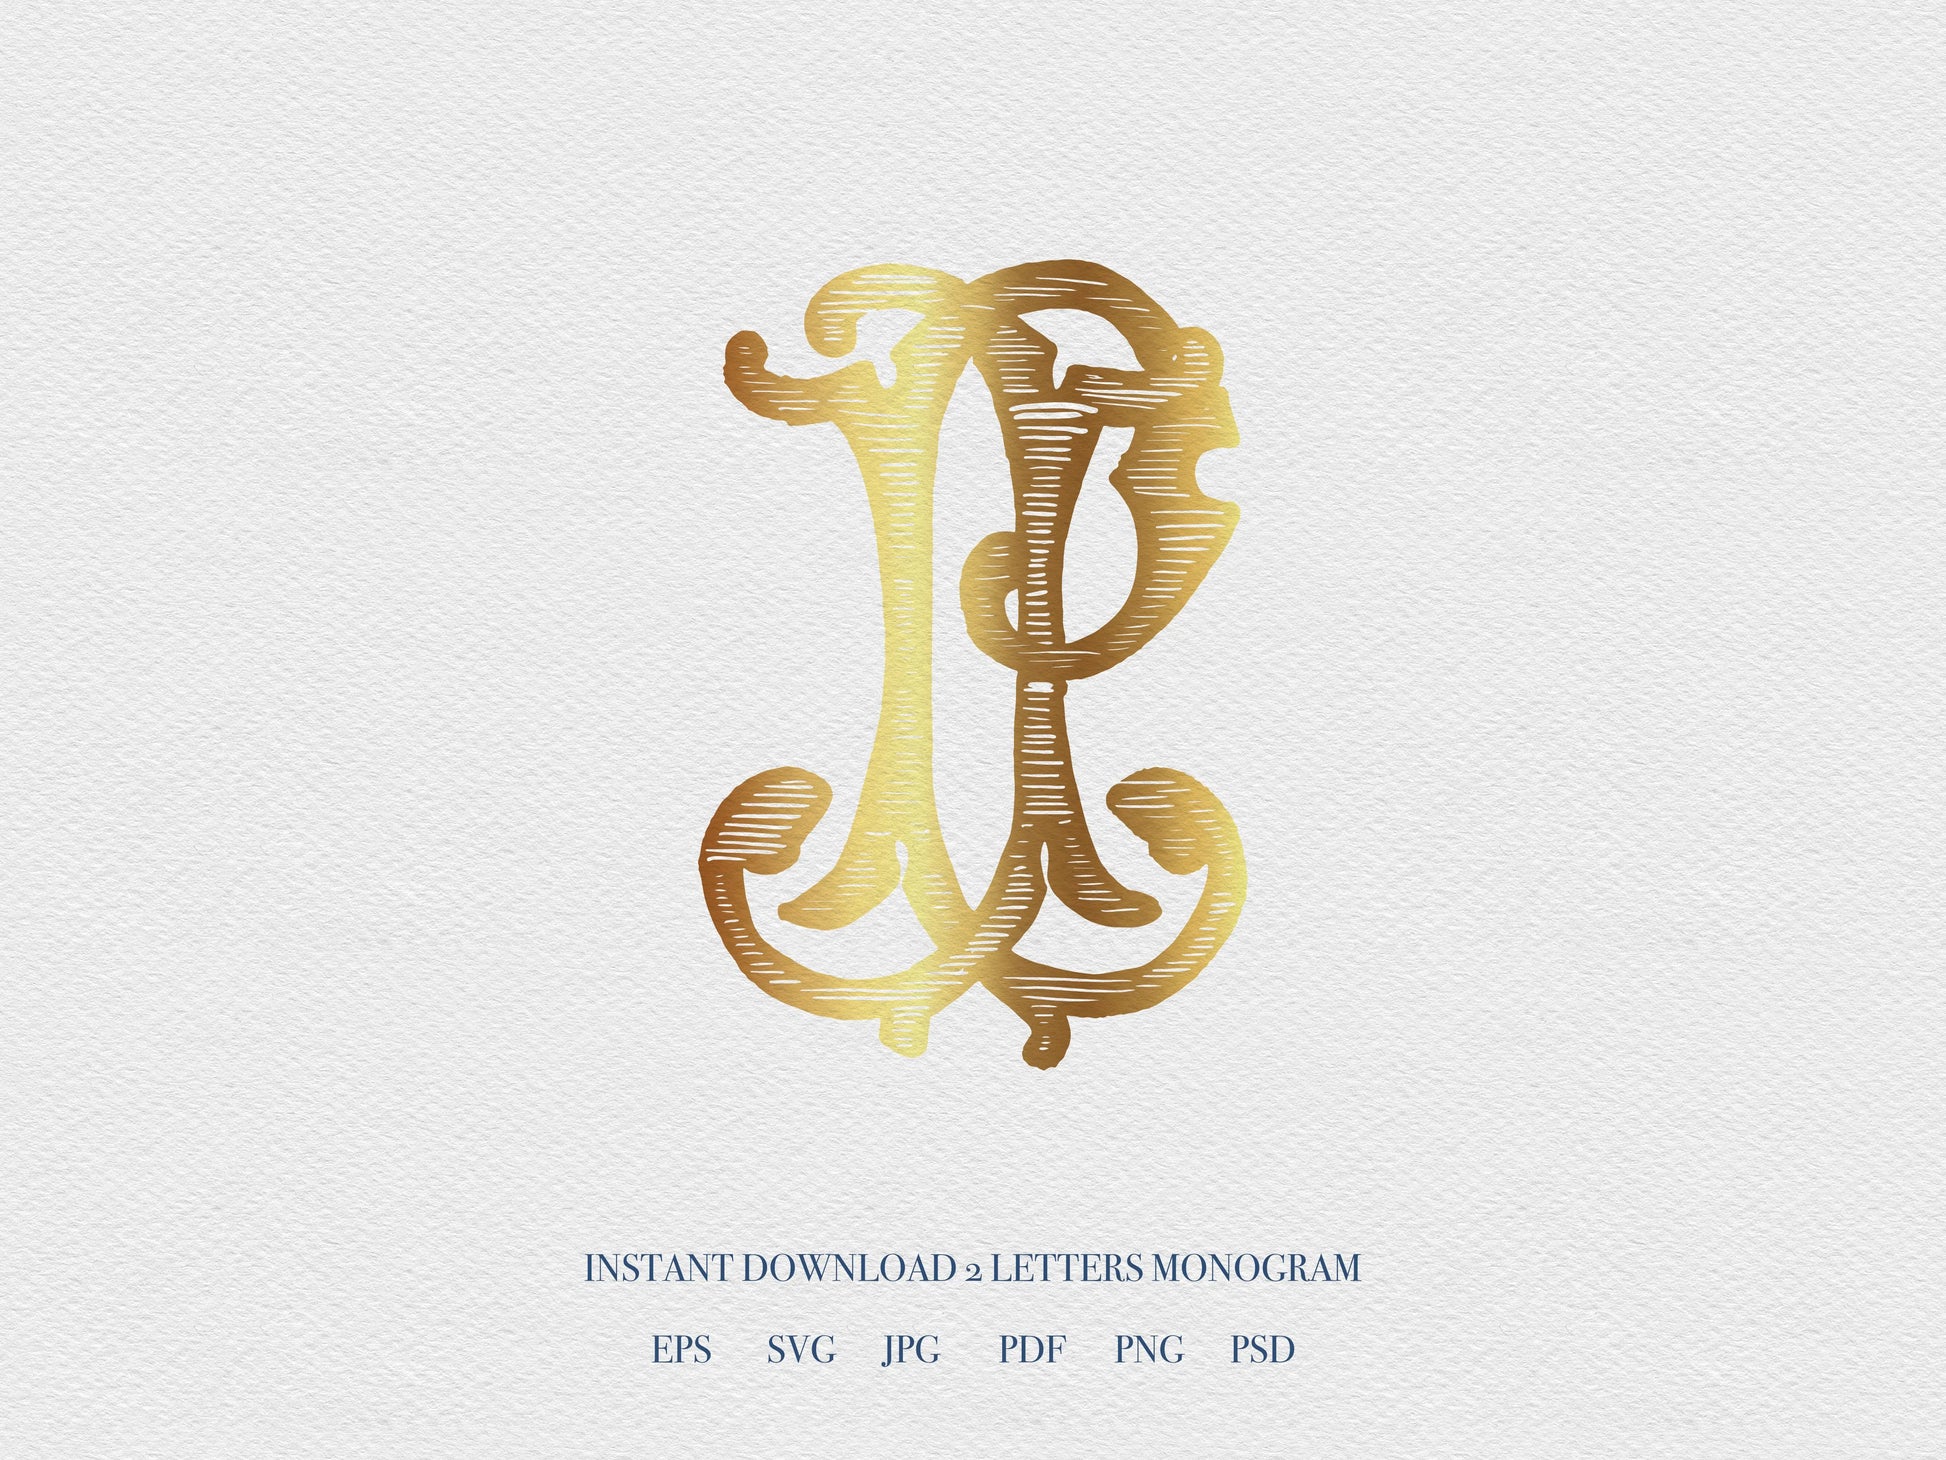 2 Letter Monogram with Letters JP | Digital Download - Wedding Monogram SVG, Personal Logo, Wedding Logo for Wedding Invitations The Wedding Crest Lab